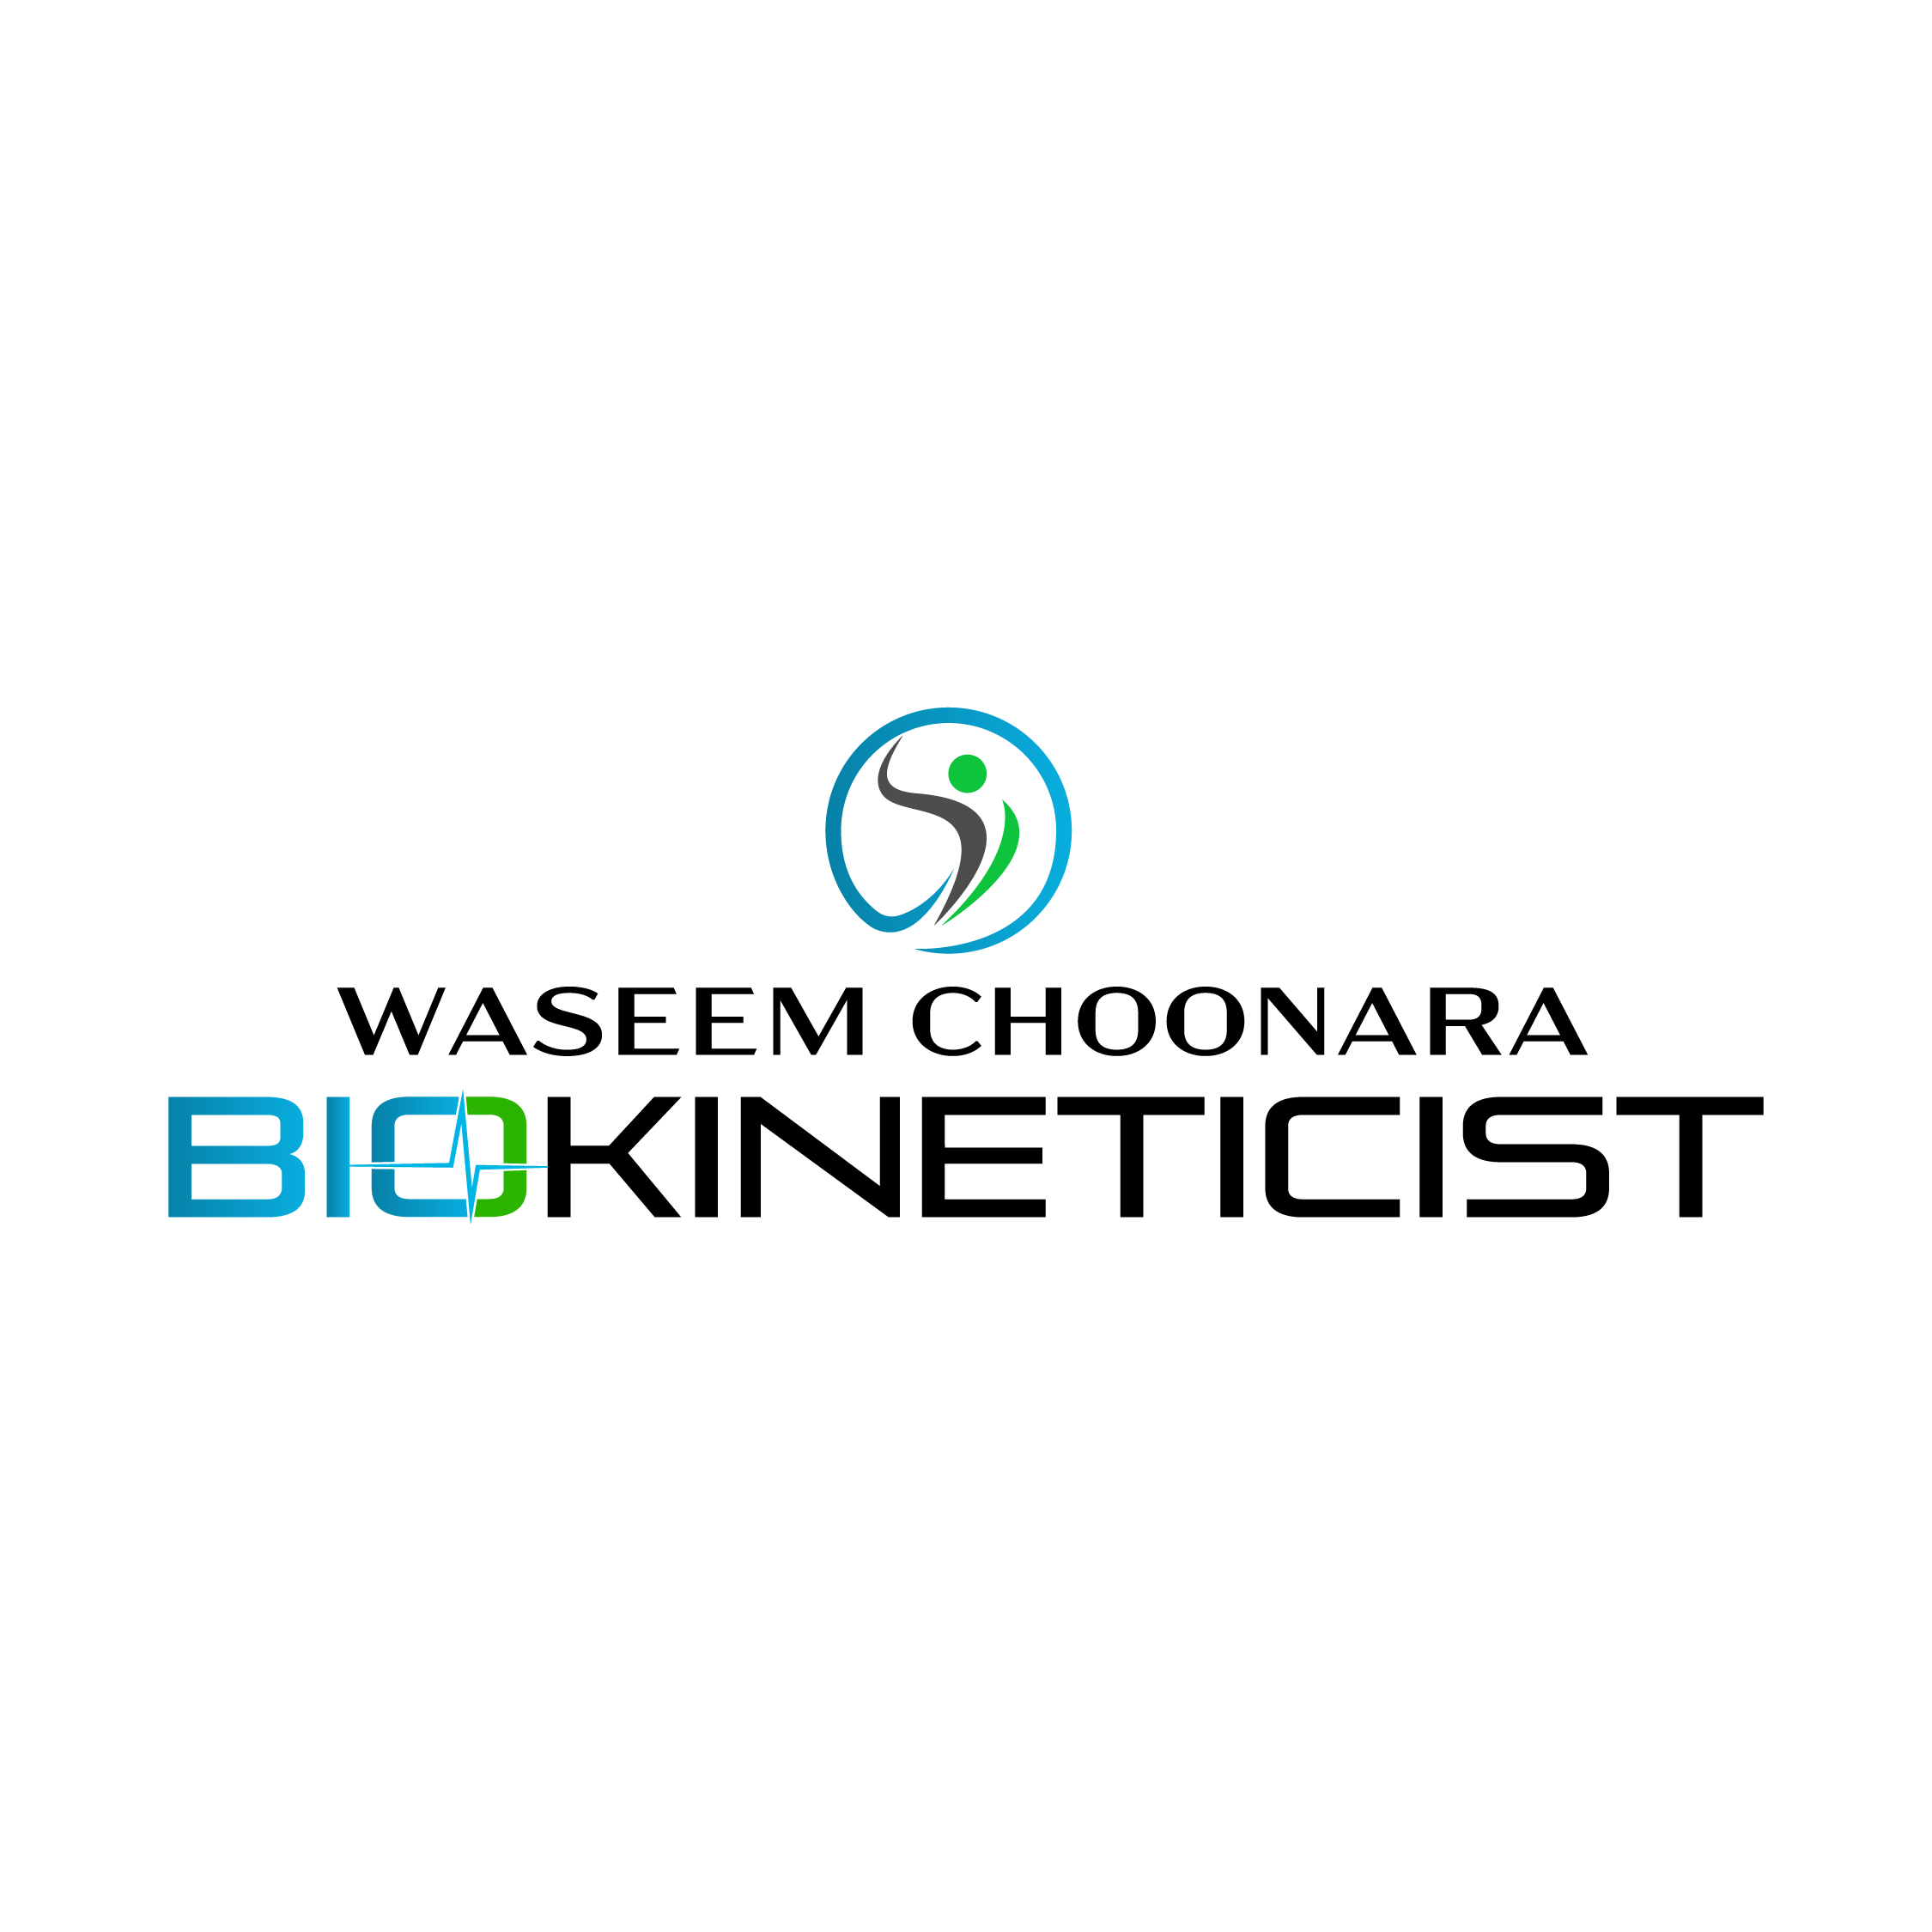 Waseem Choonara Biokineticist